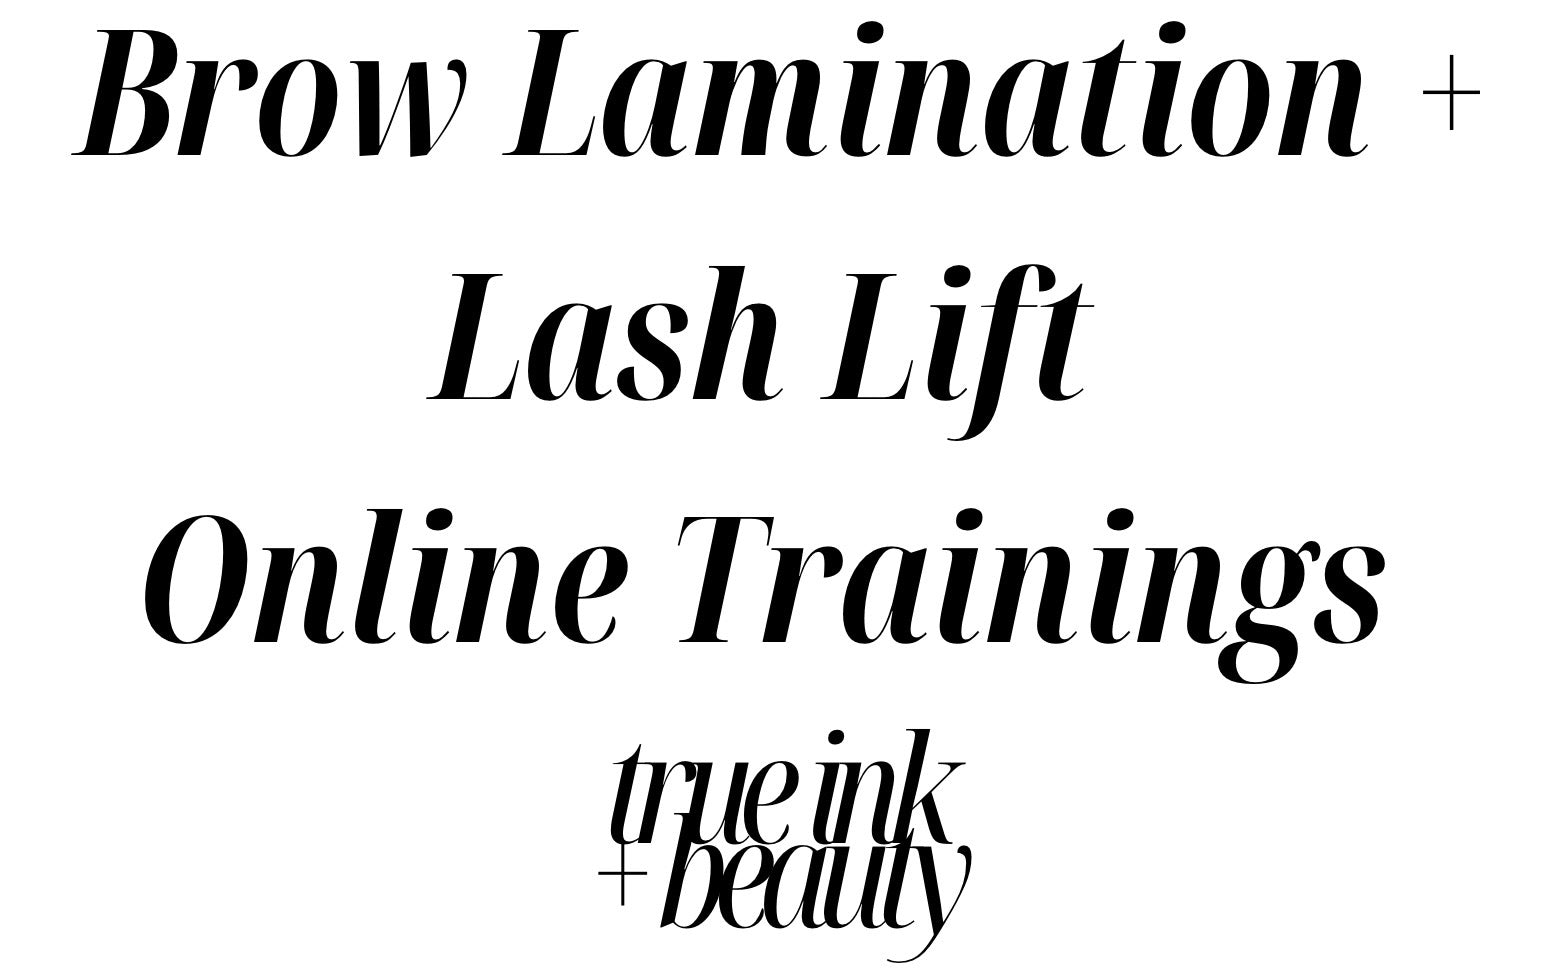 Load video: Brow Lamination Lash Lift Trainings Intro Video